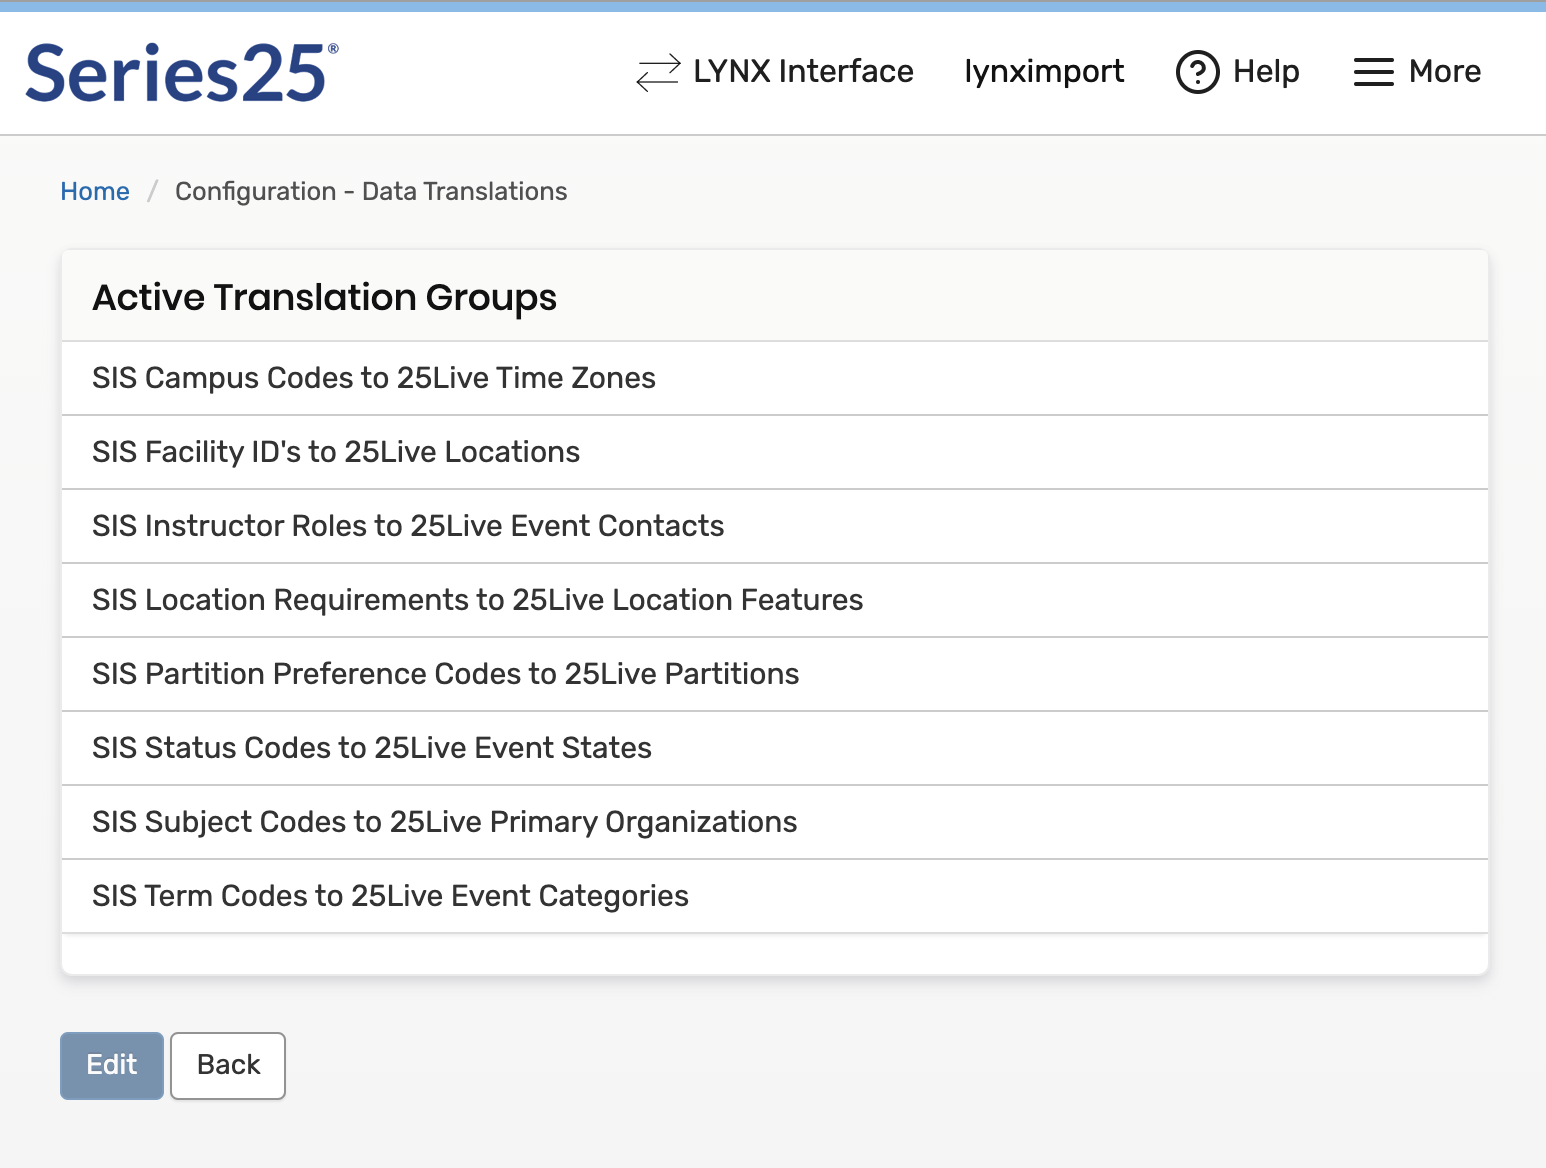 Data Translation options in LYNX